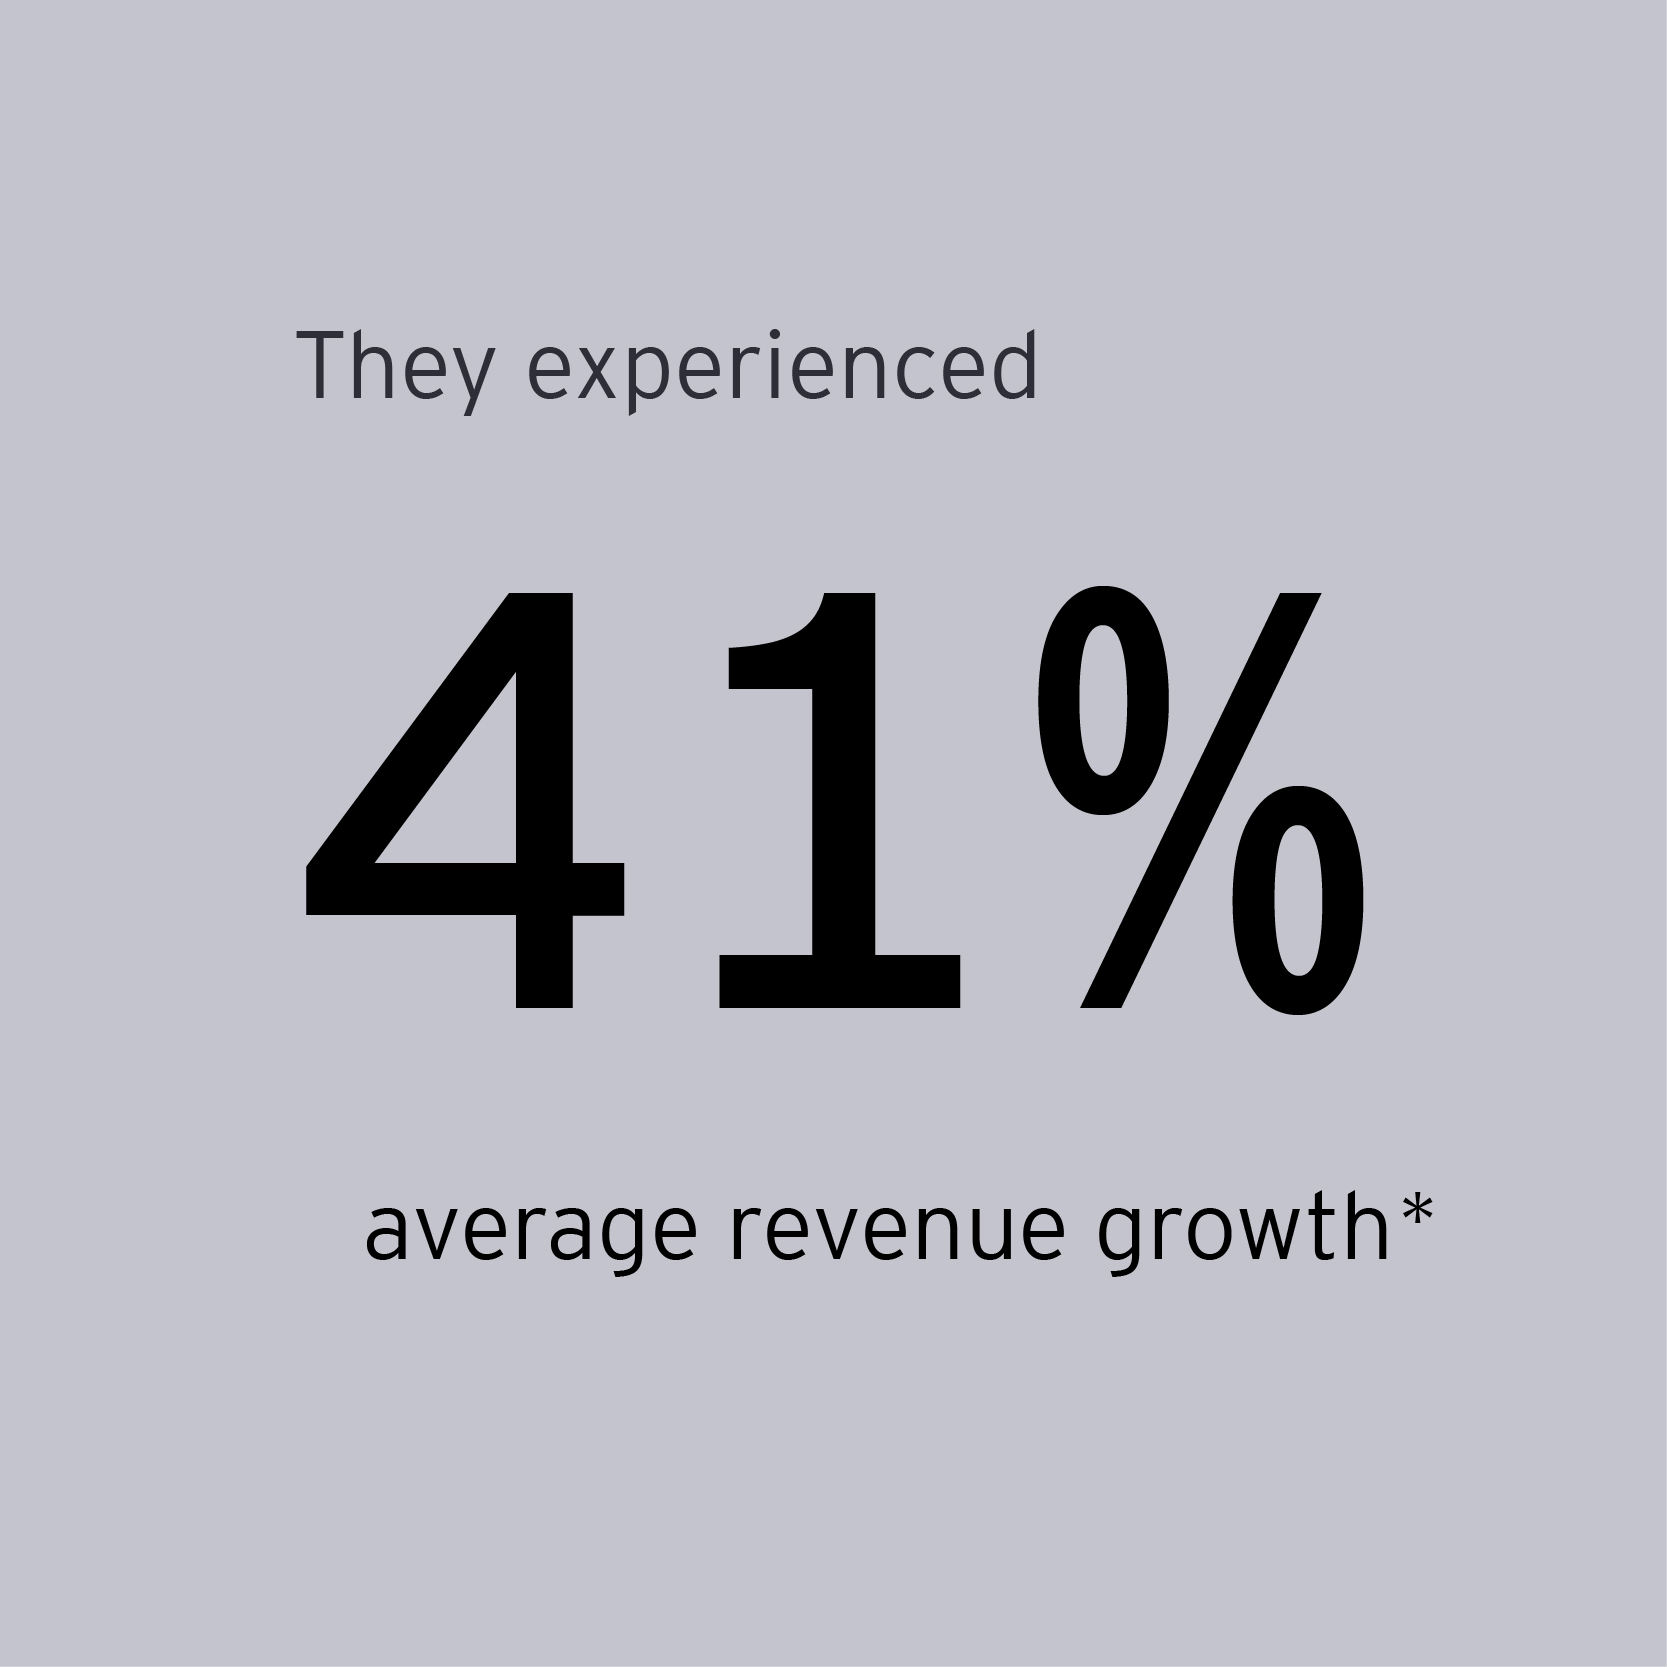 EOY Greater Philadelphia finalists experienced 41% average revenue growth